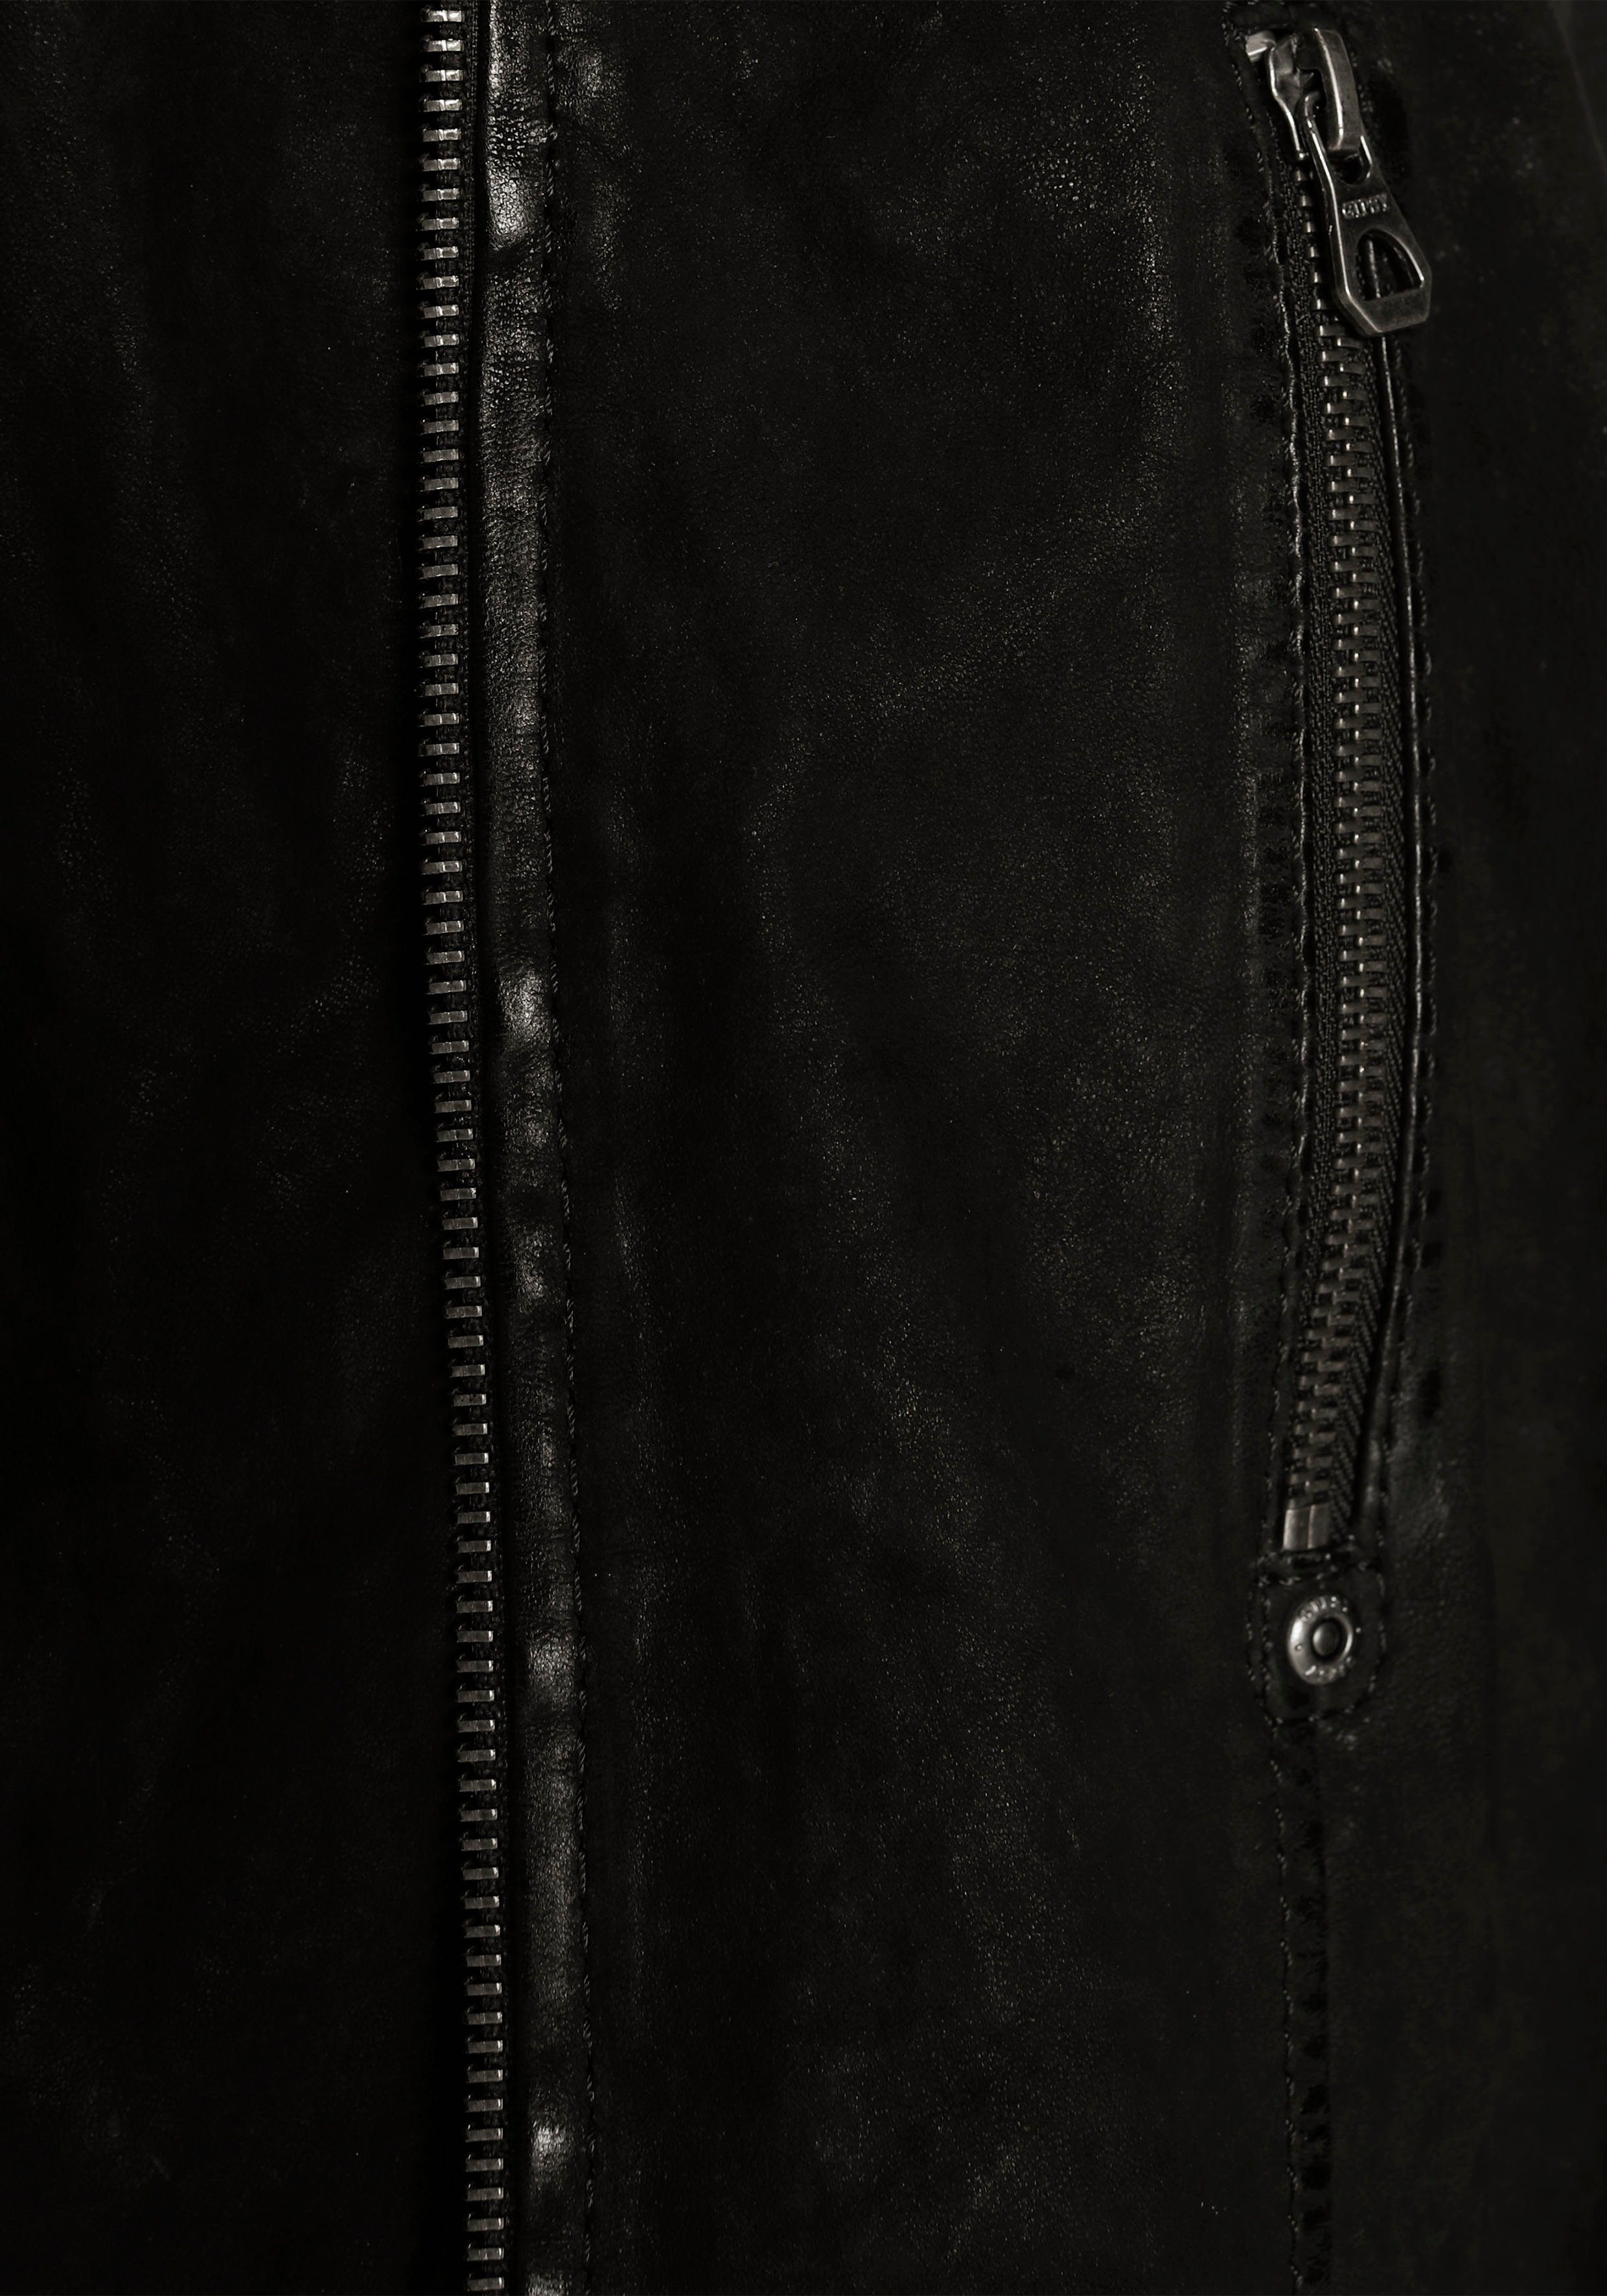 CYARA aus mit Lederjacke Kapuzen-Inlay schwarz Jerseyqualität Lederjacke abnehmbarem Gipsy